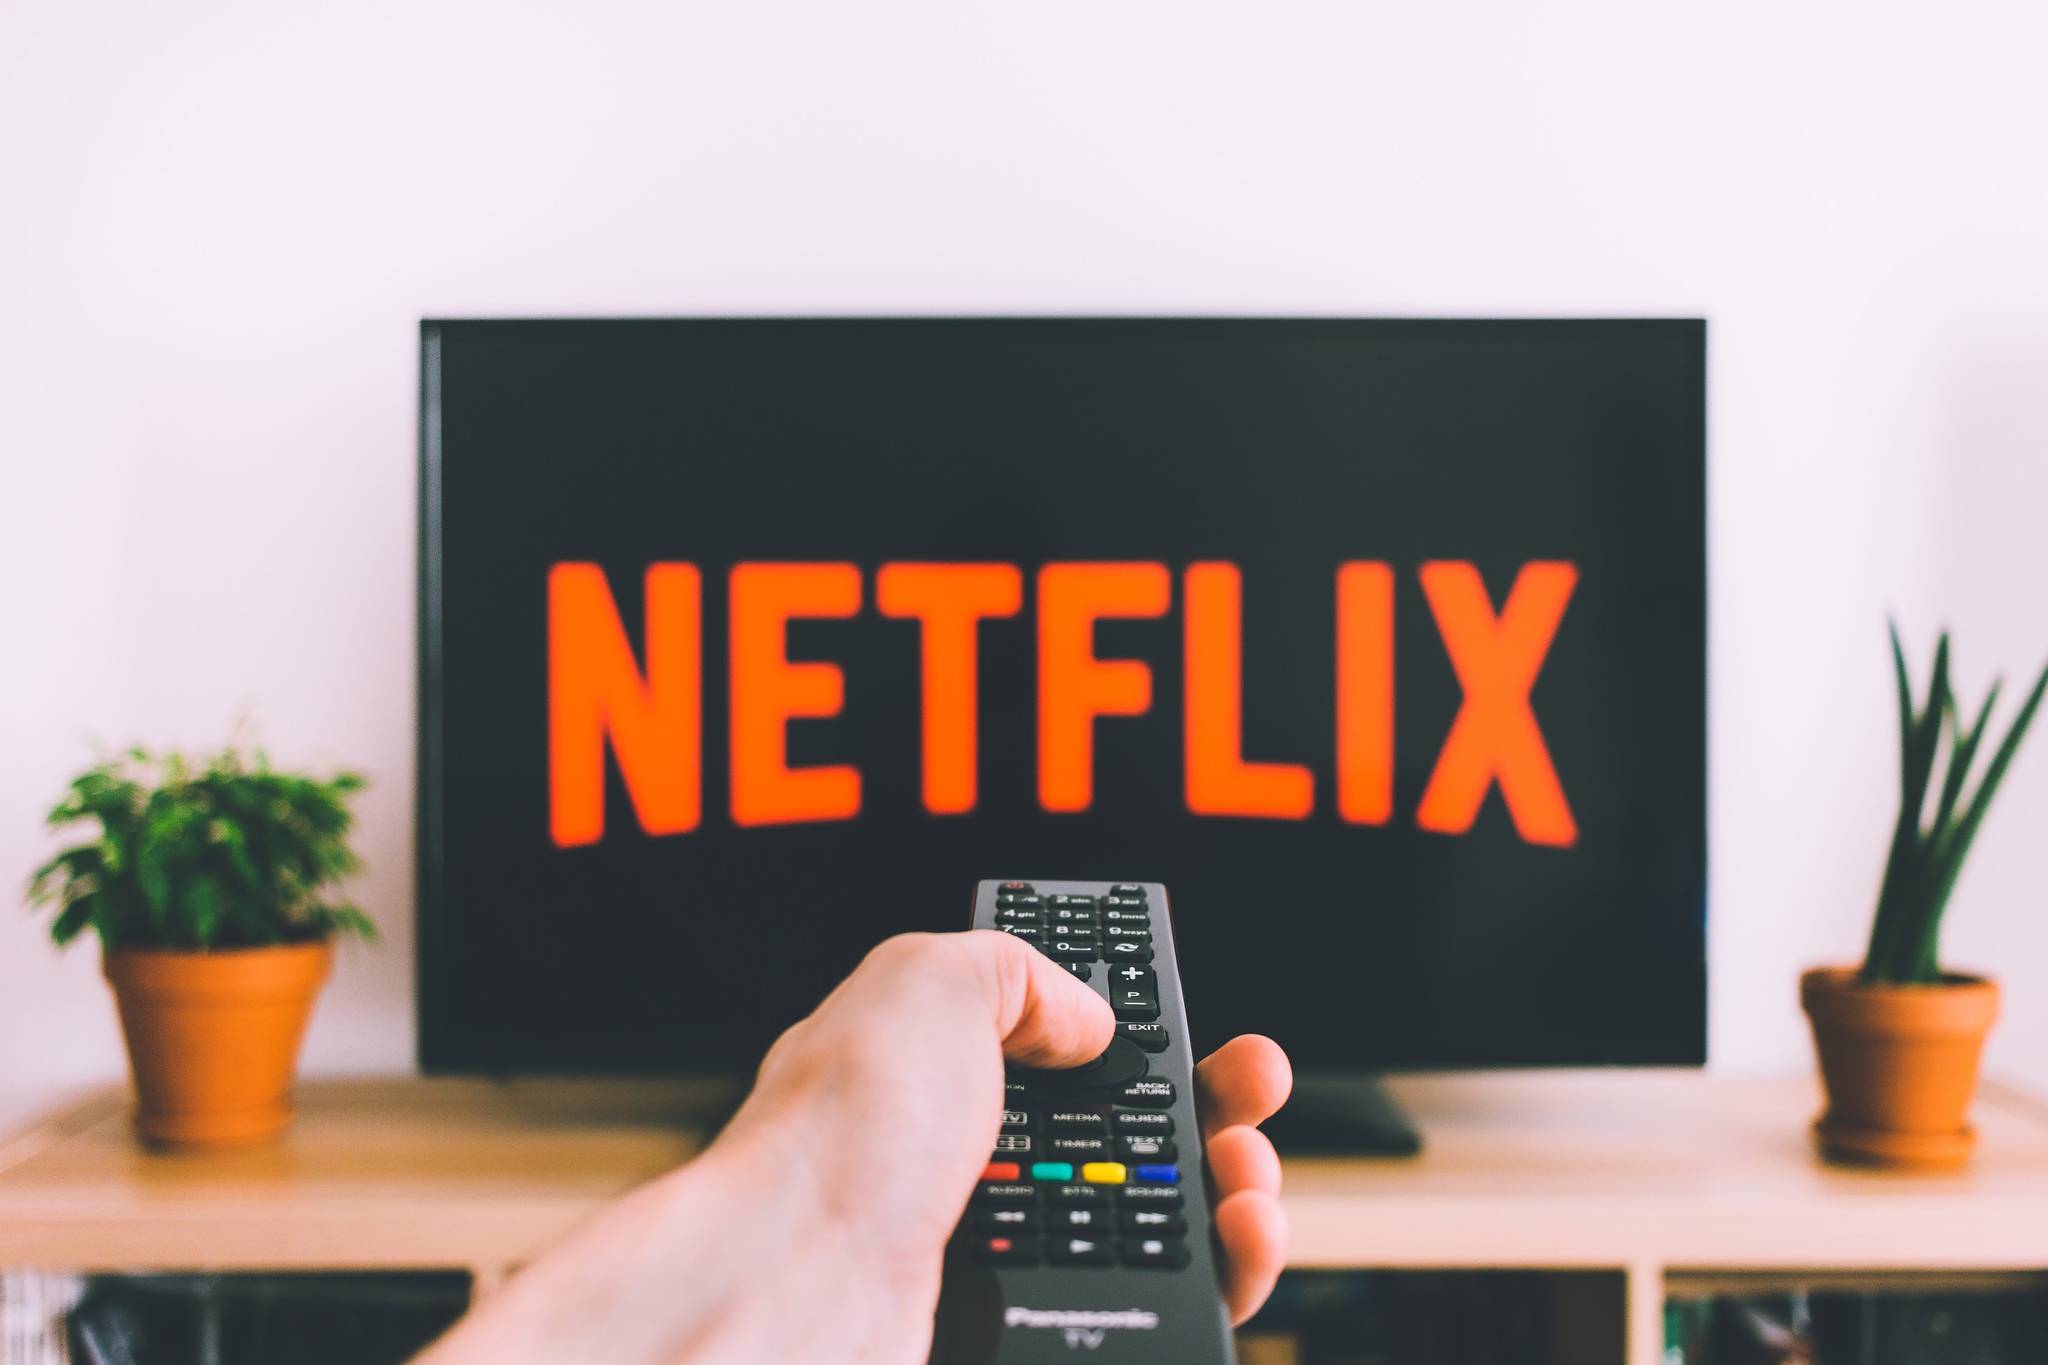 Netflix prepares to exit Georgia to show its values